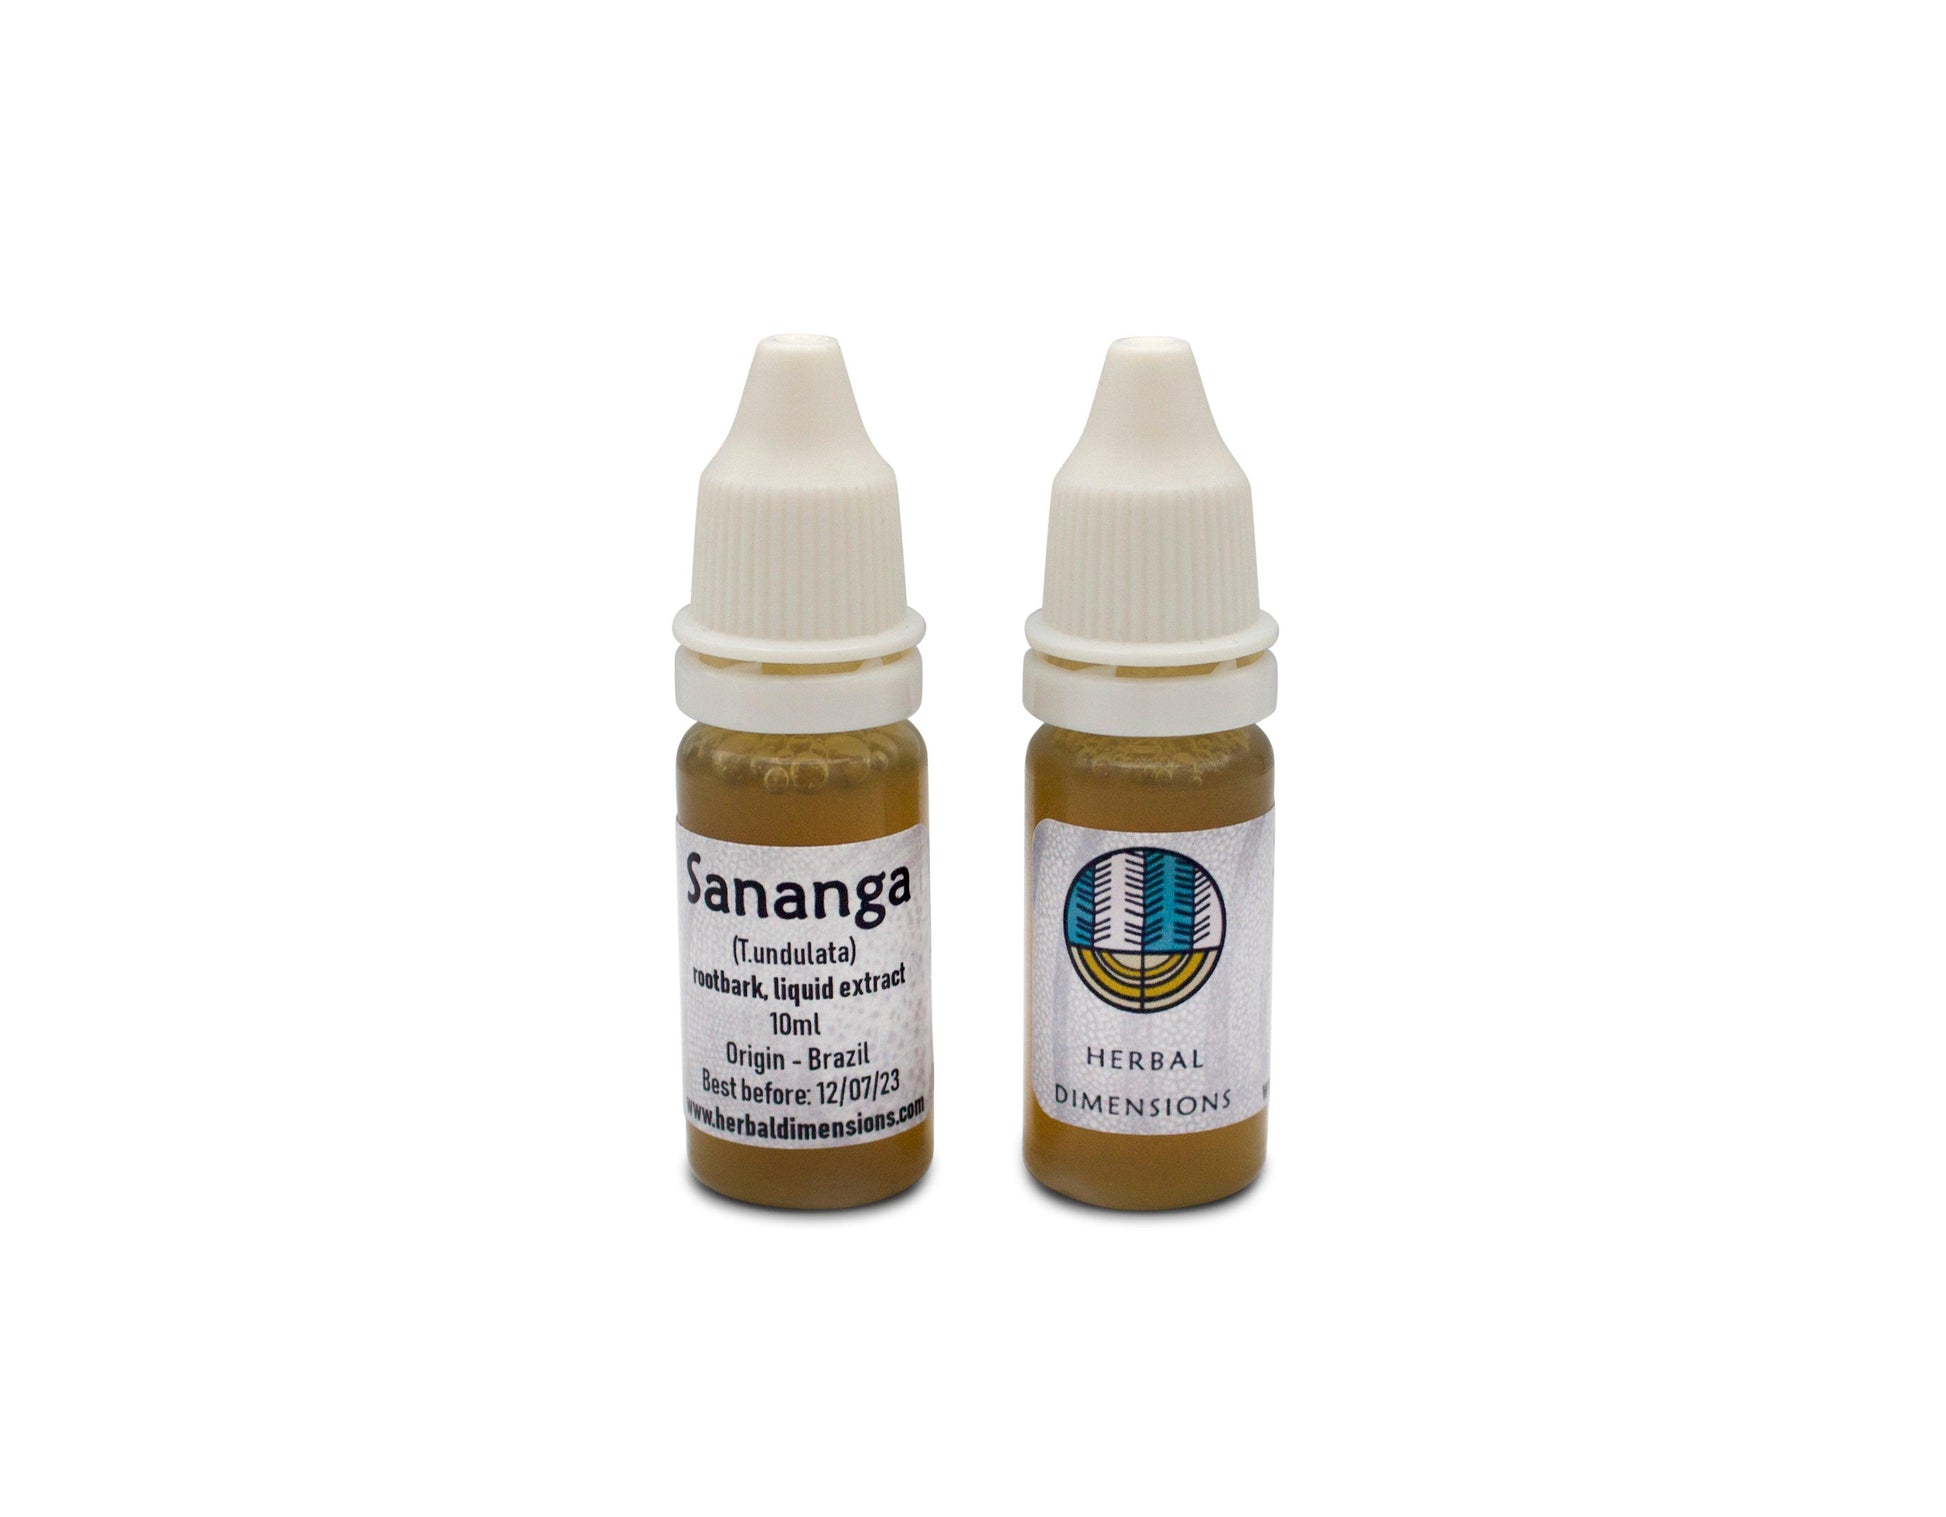 Sananga eye drops bottle from Herbal Dimensions